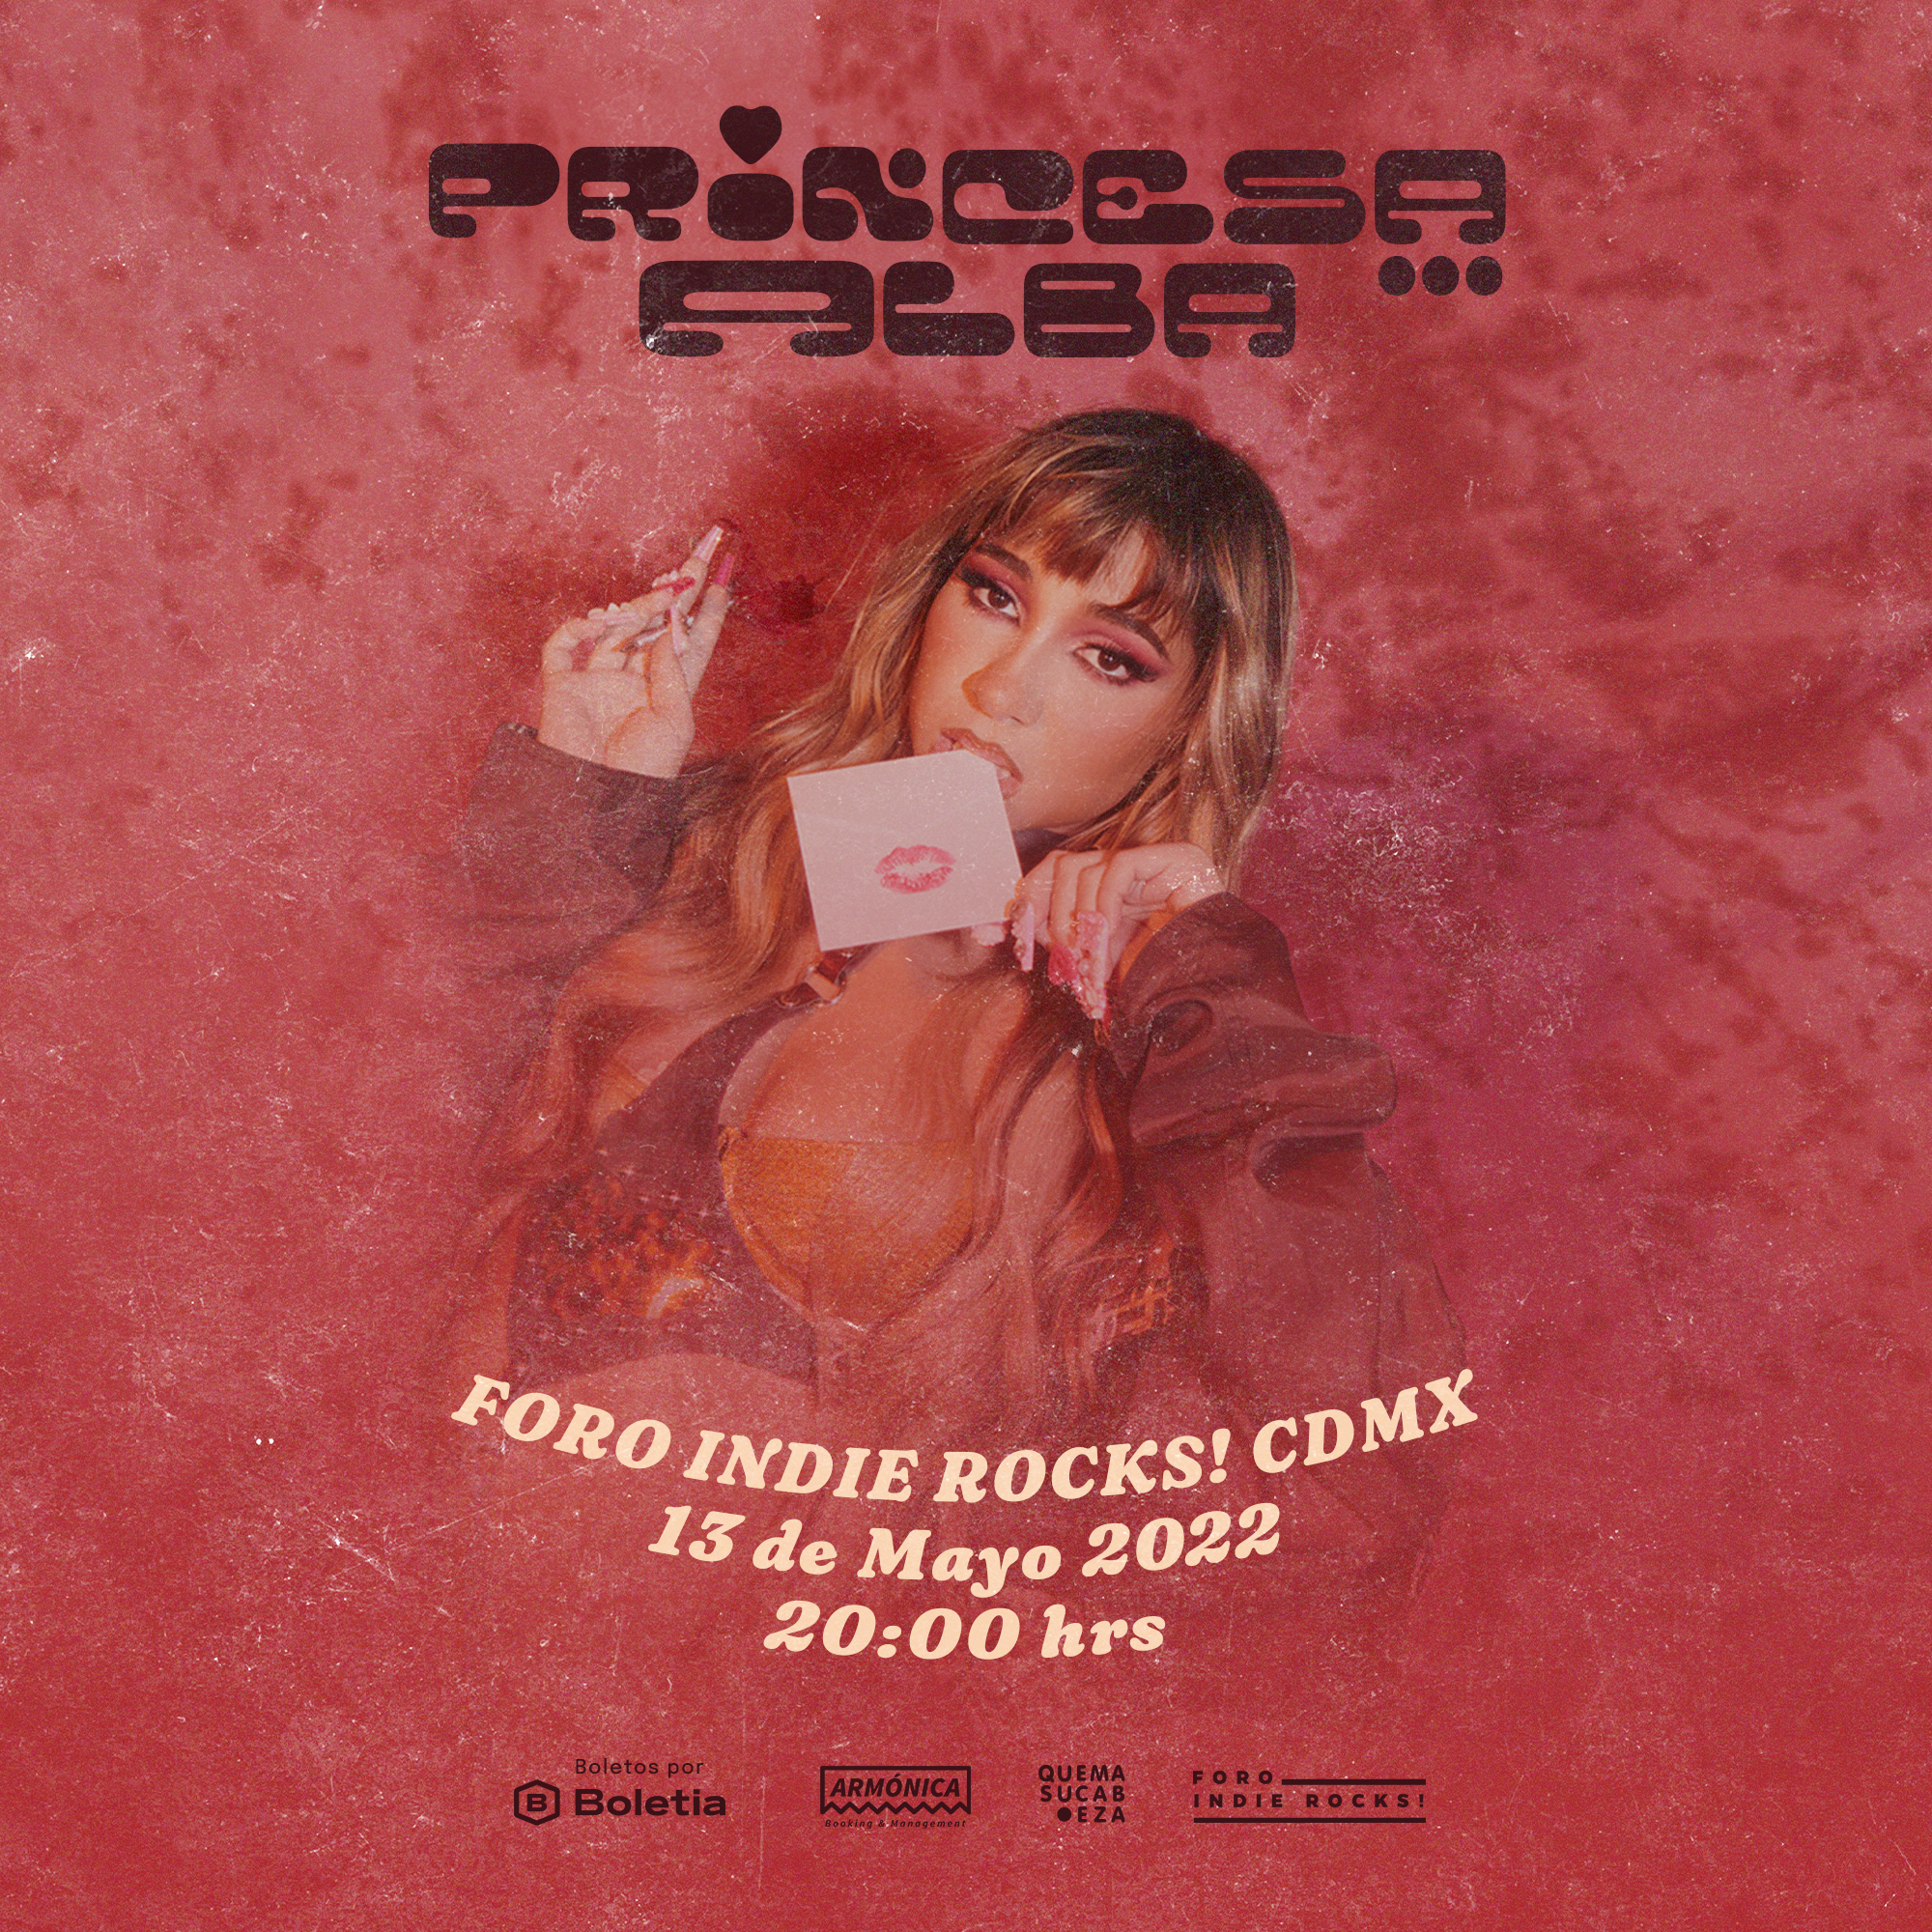 Princesa alba_foro indie rocks